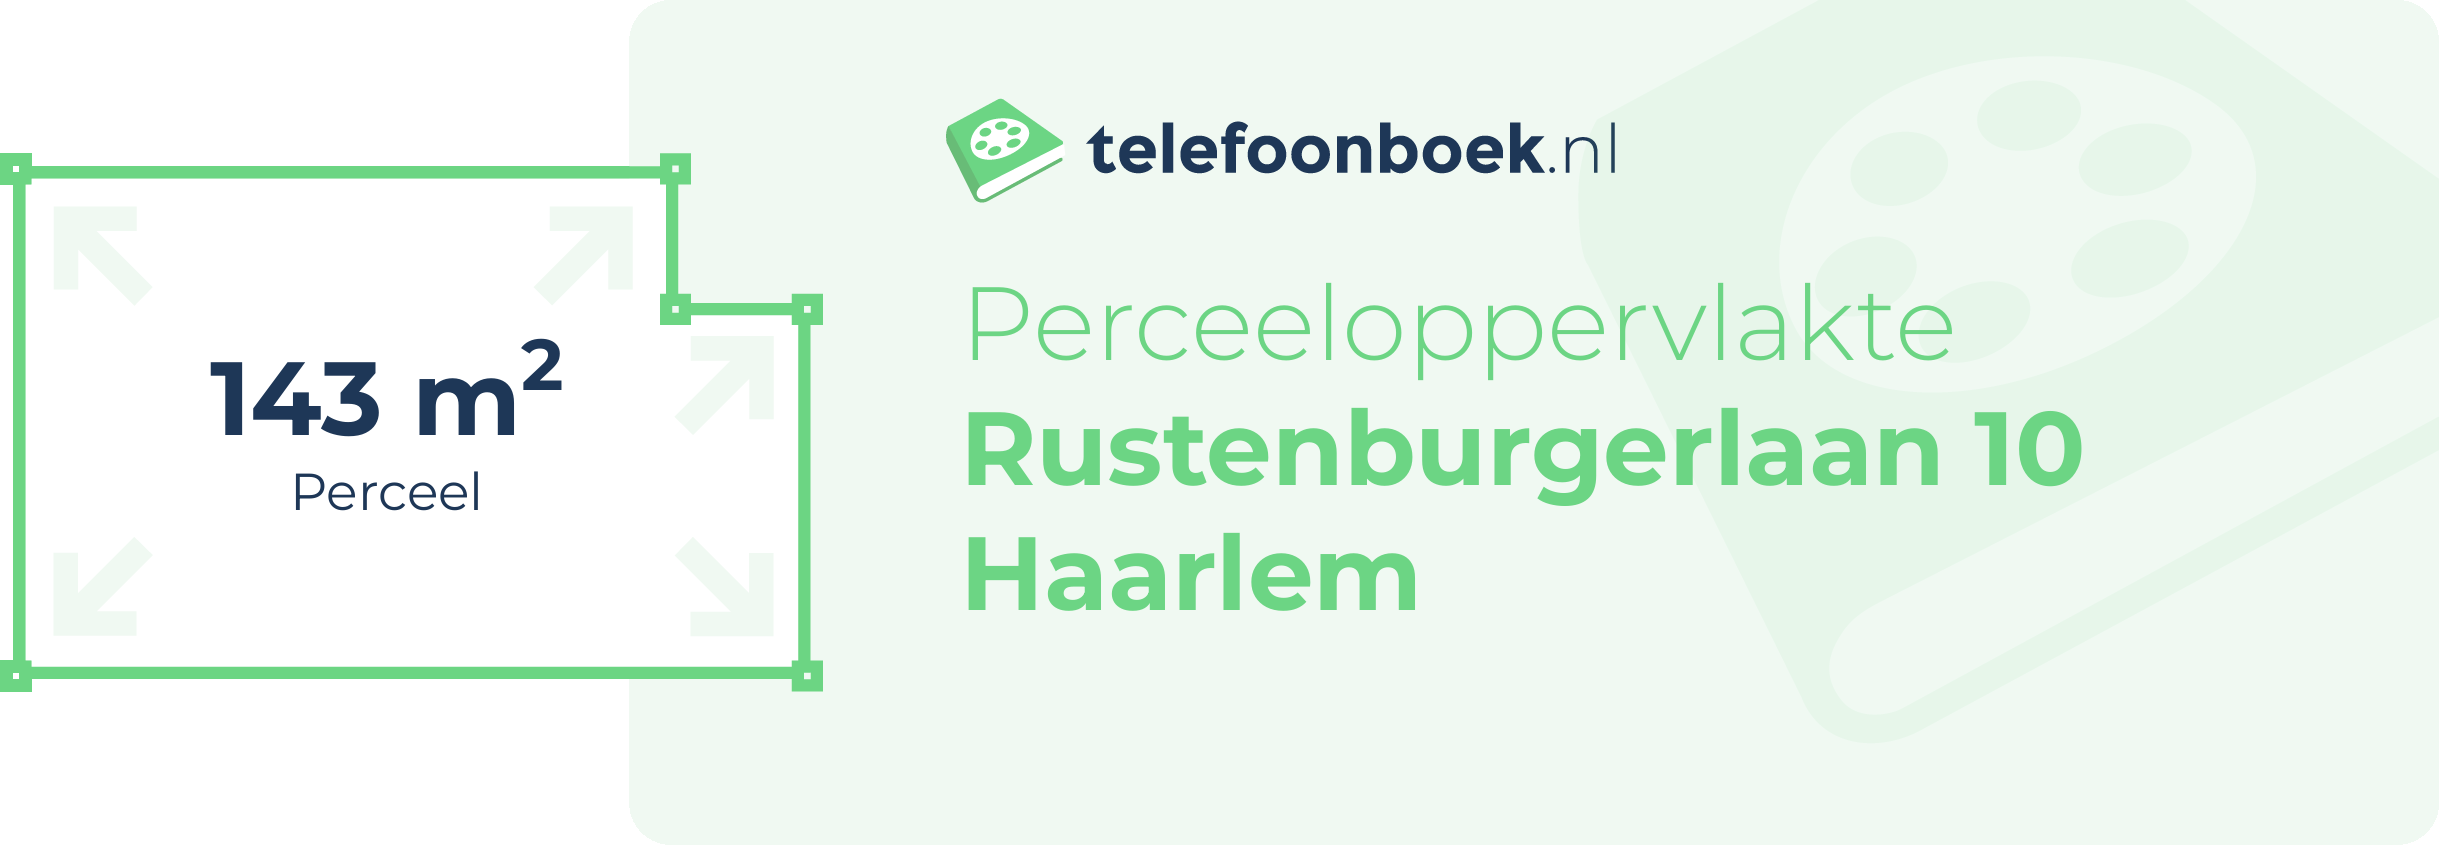 Perceeloppervlakte Rustenburgerlaan 10 Haarlem